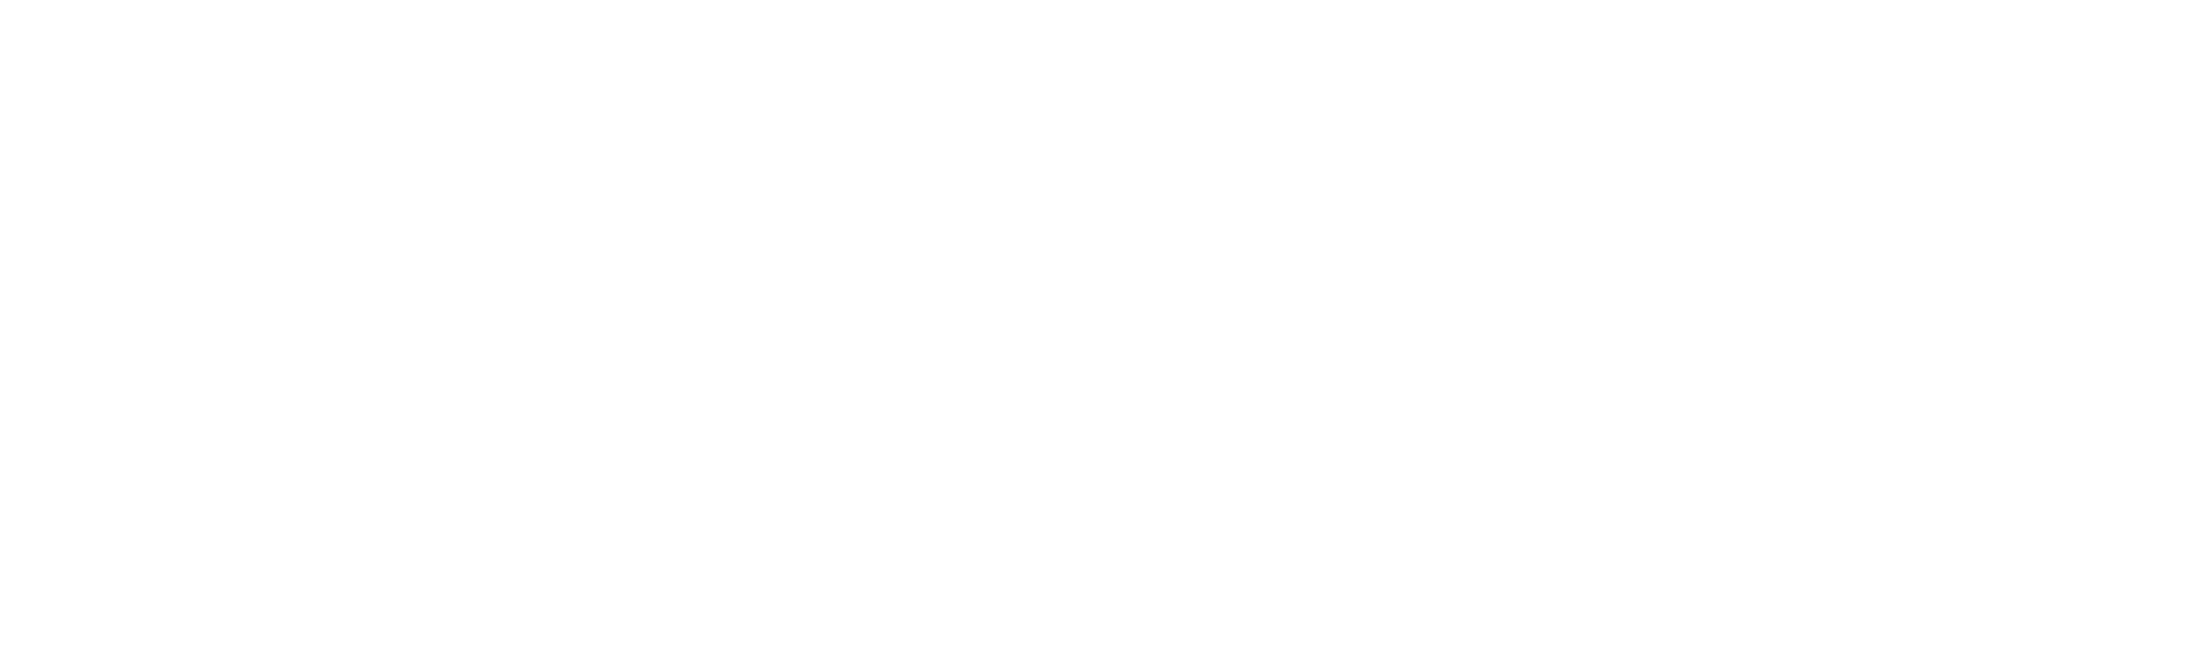 Logo Splunk blanco